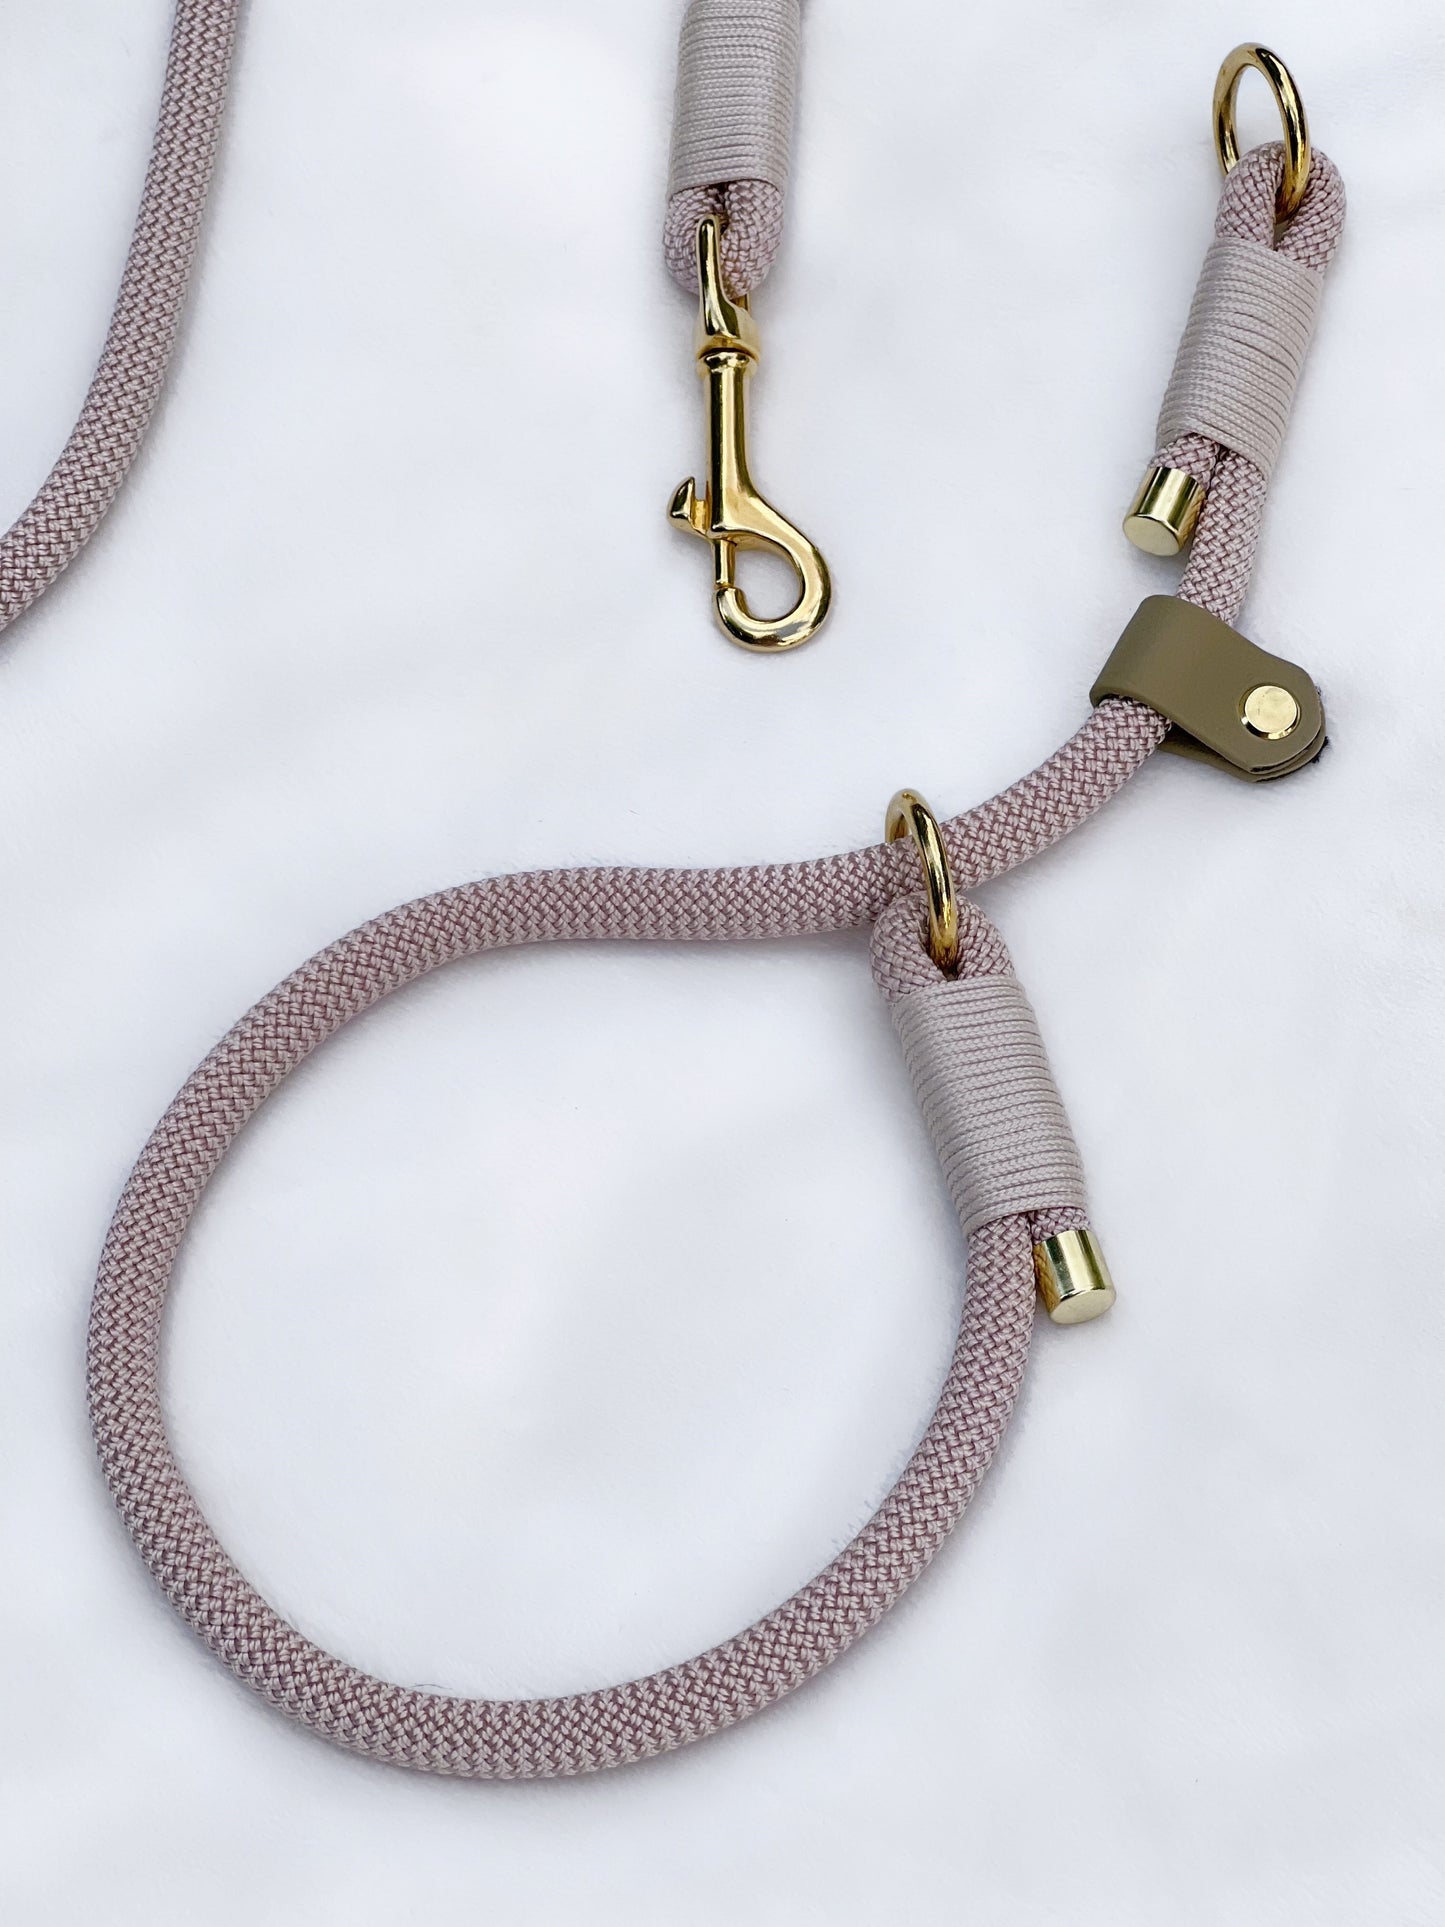 Rope Collar | Slip Lead Collar